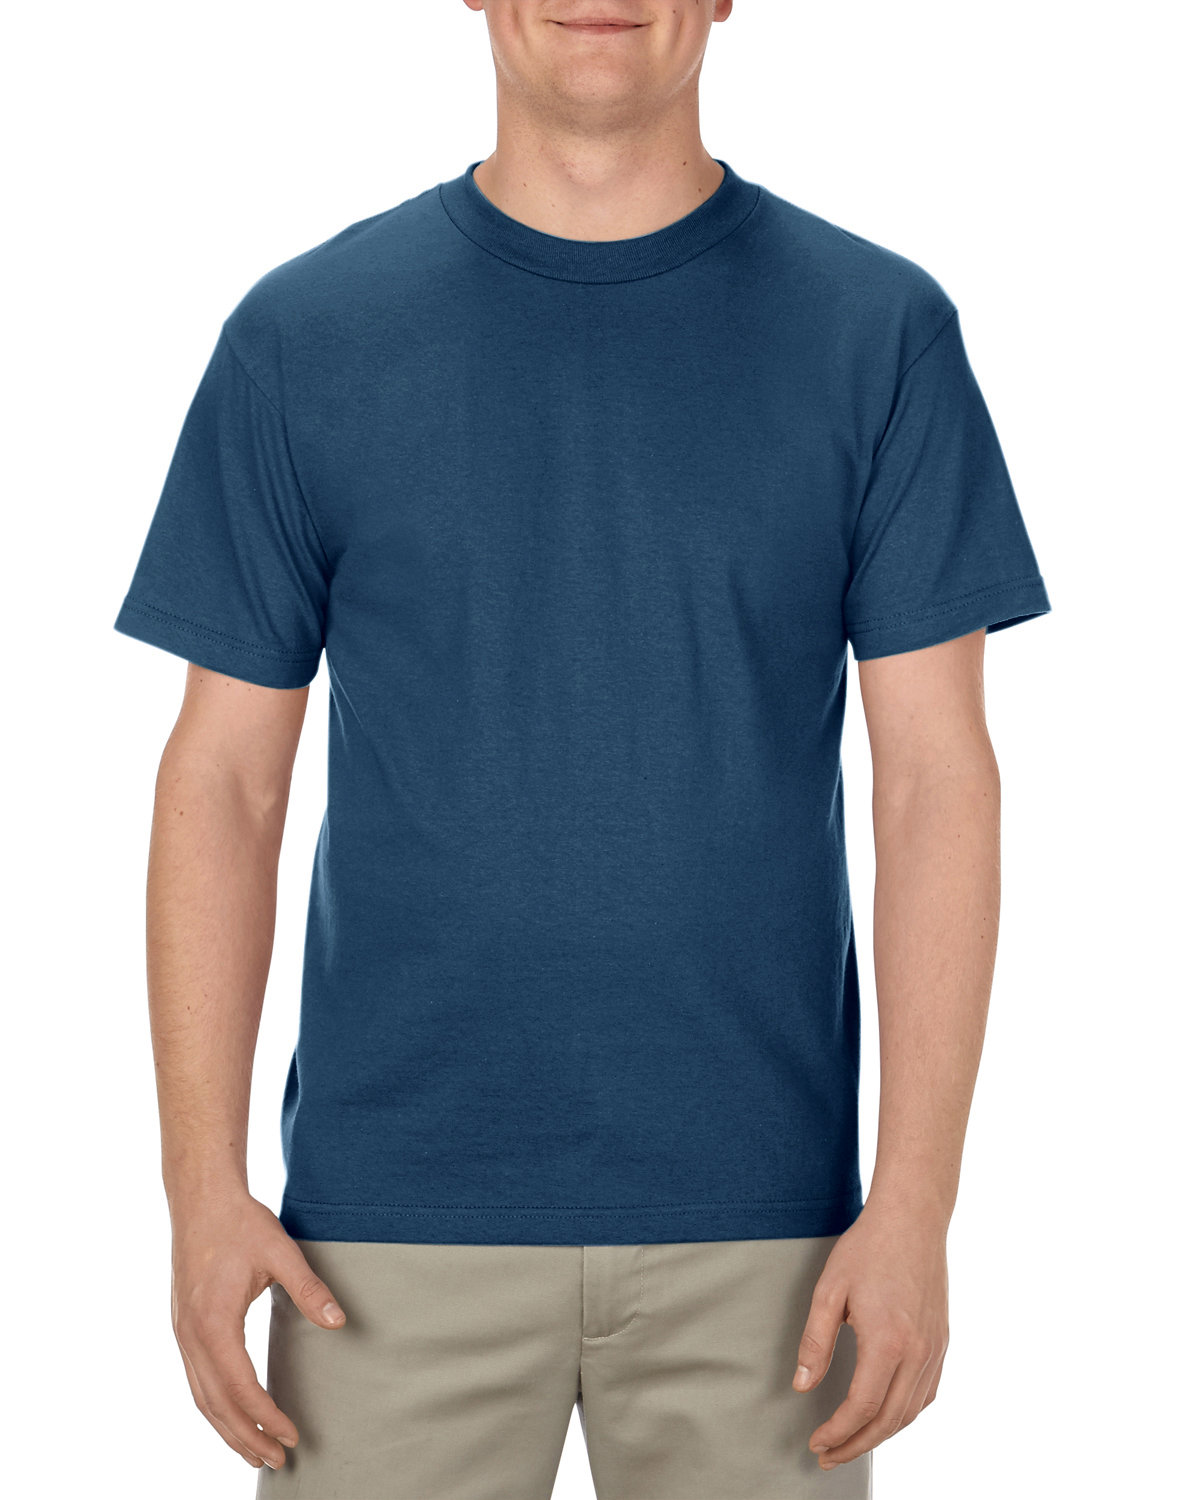 American Apparel Adult 6.0 oz., 100% Cotton T-Shirt HARBOR BLUE 